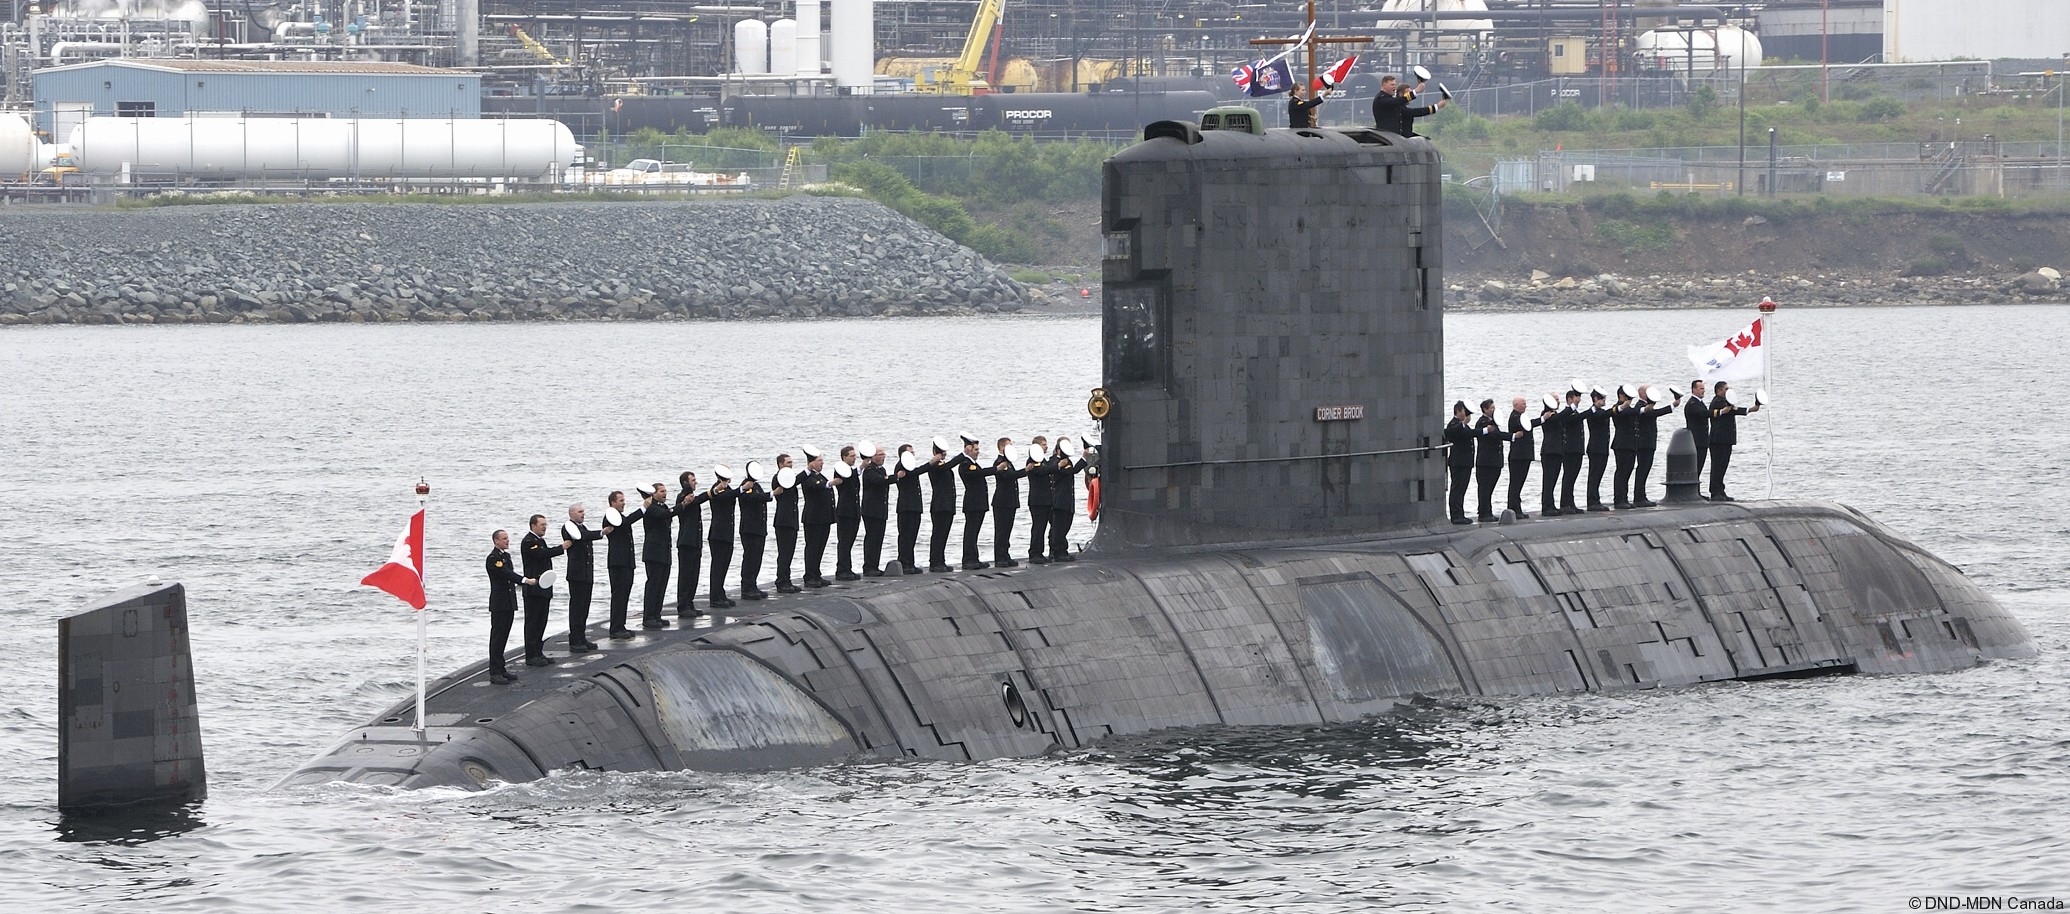 ssk-878 hmcs corner brook victoria upholder class patrol submarine ncsm royal canadian navy 19